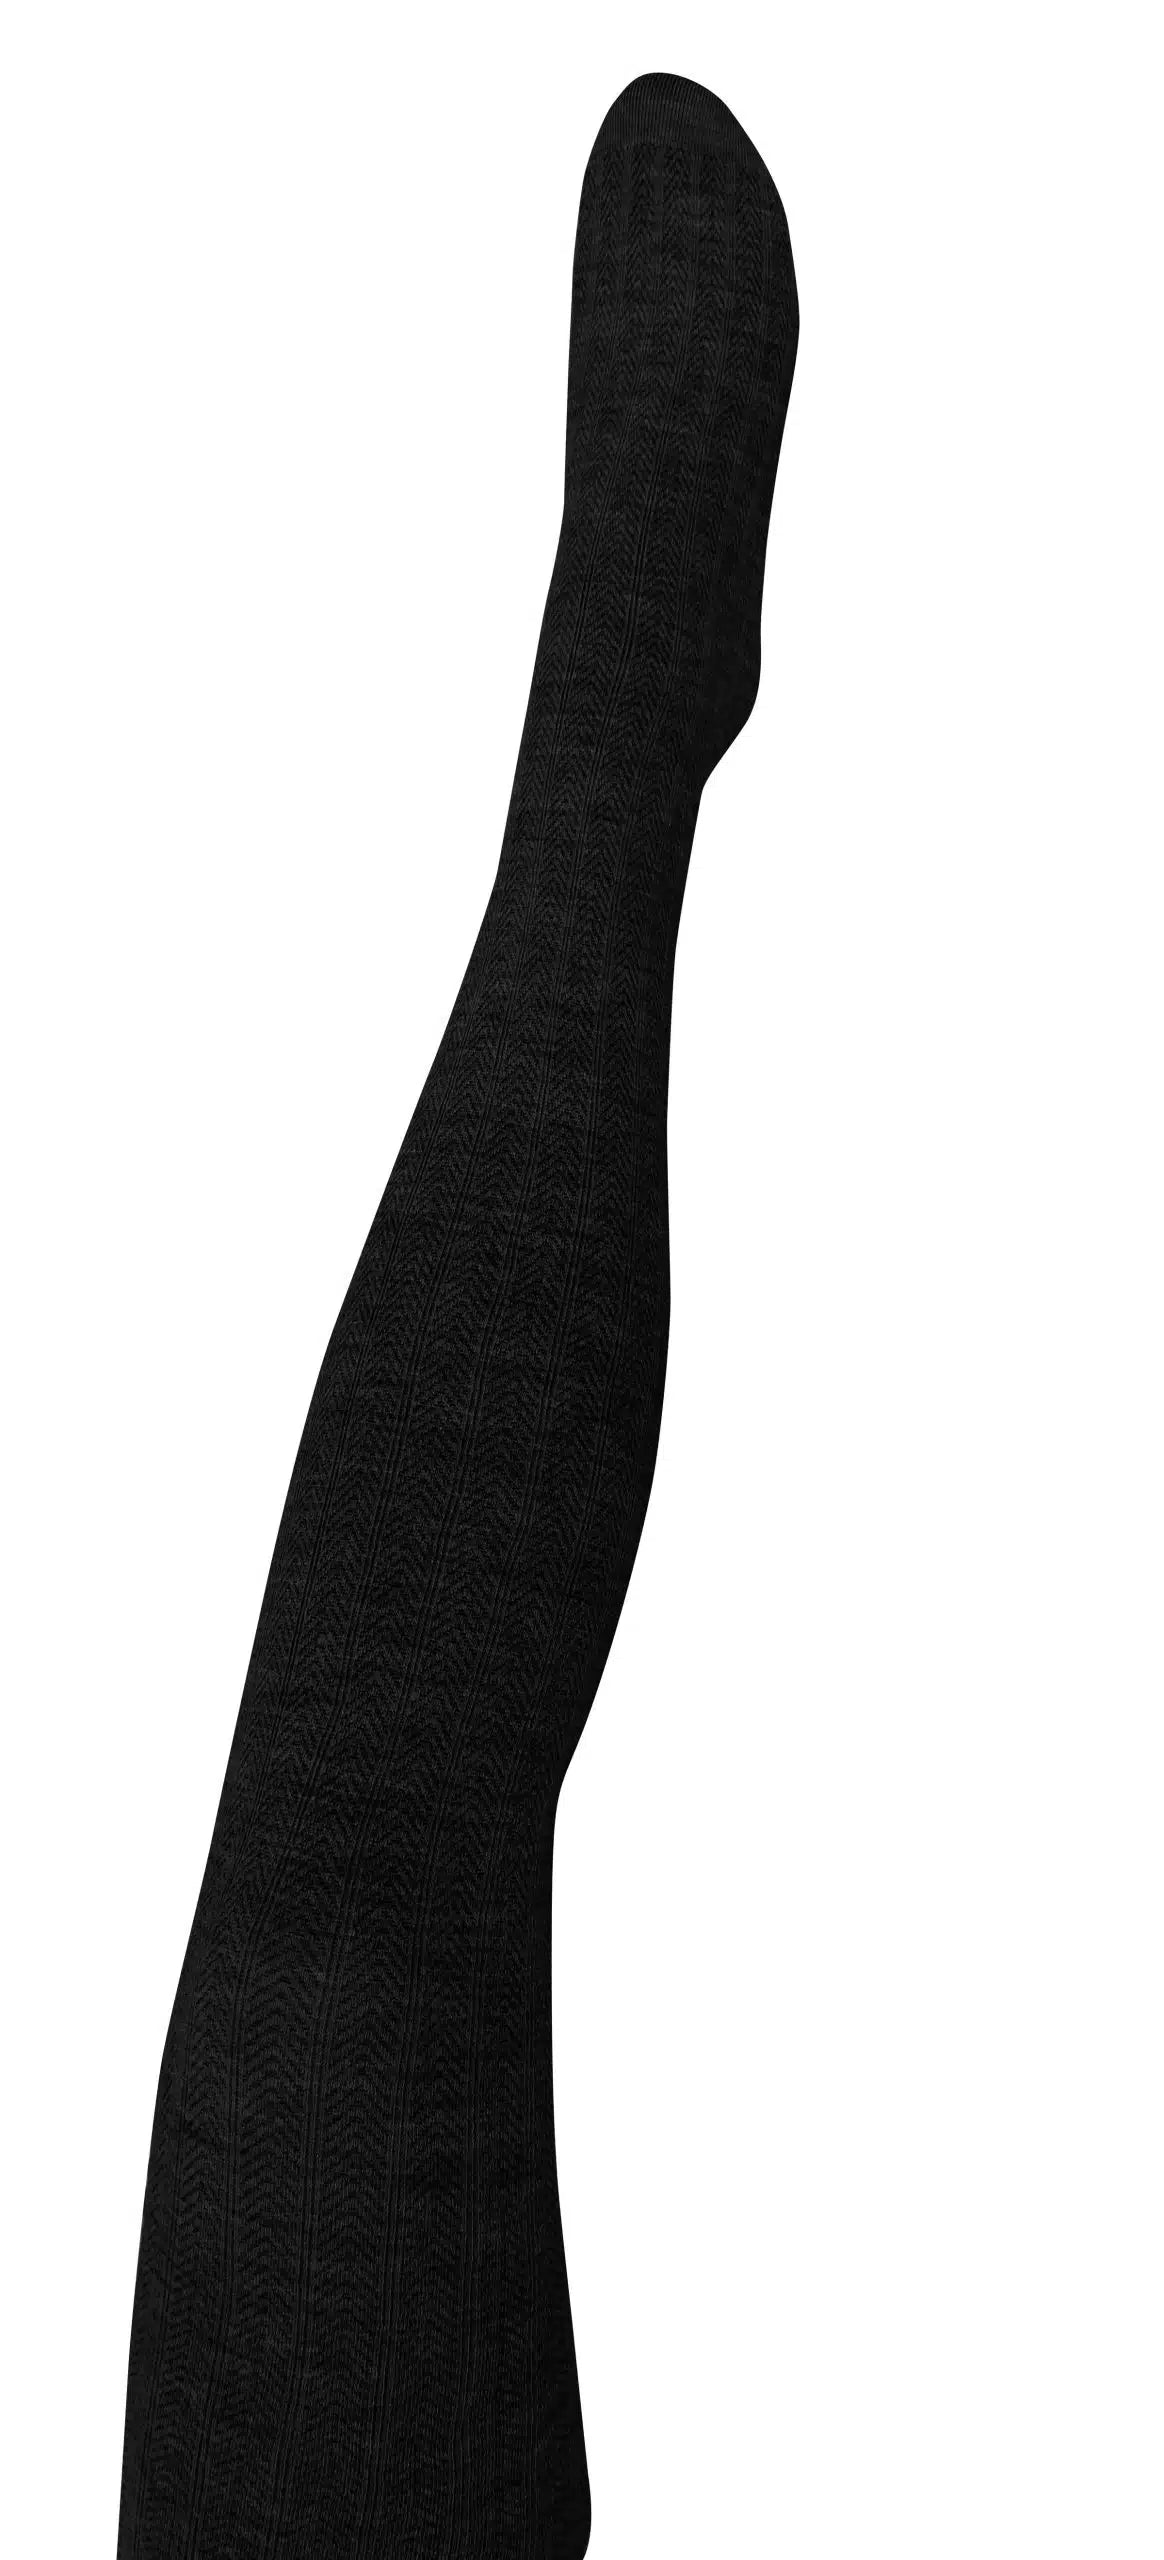 ‘Martini’ Merino Wool Tights - Tightology Tights Tightology Black Small/Medium 